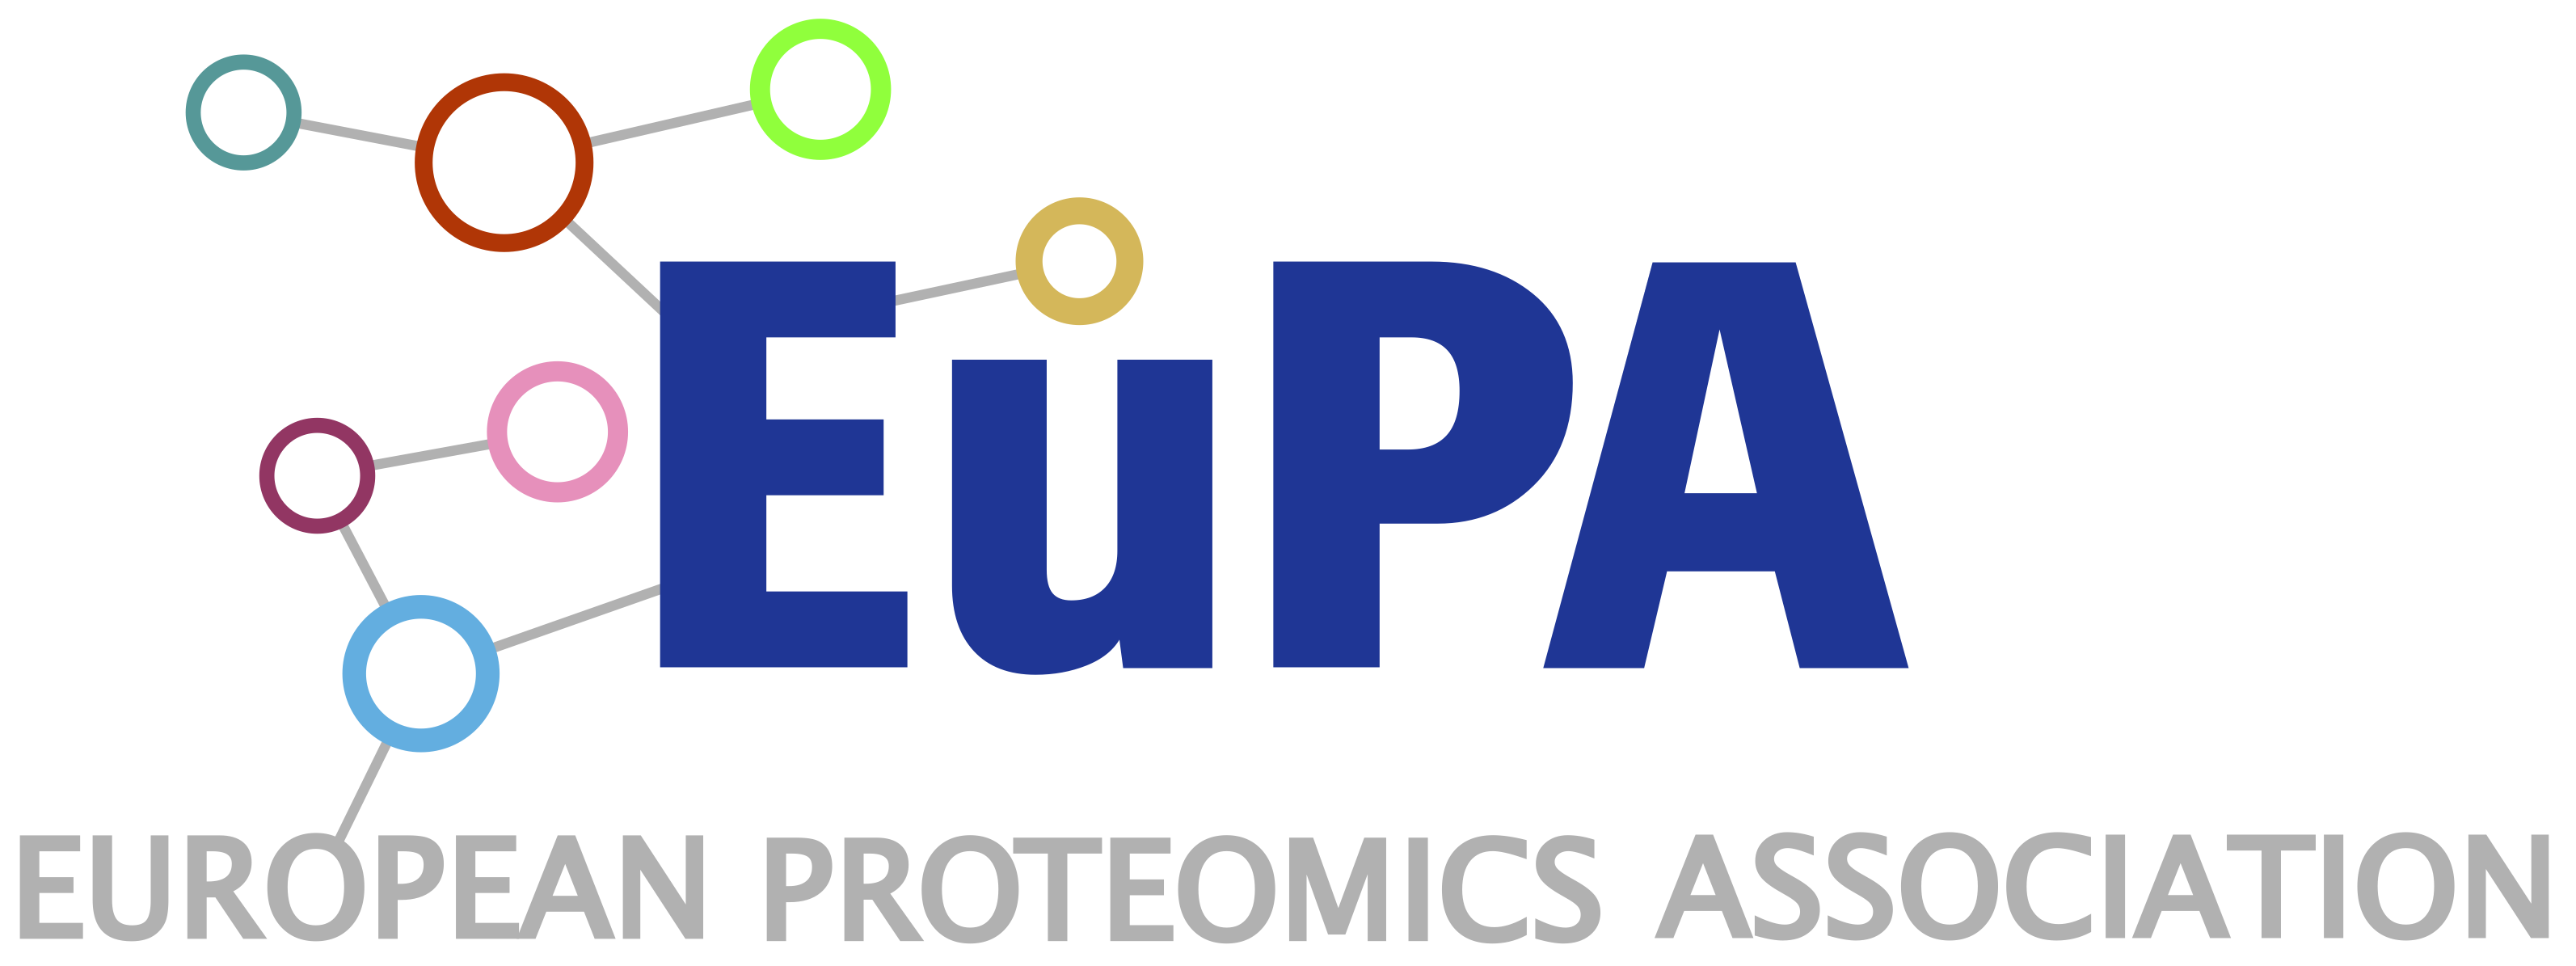 eupa-logo-final-white-background-20120615.png